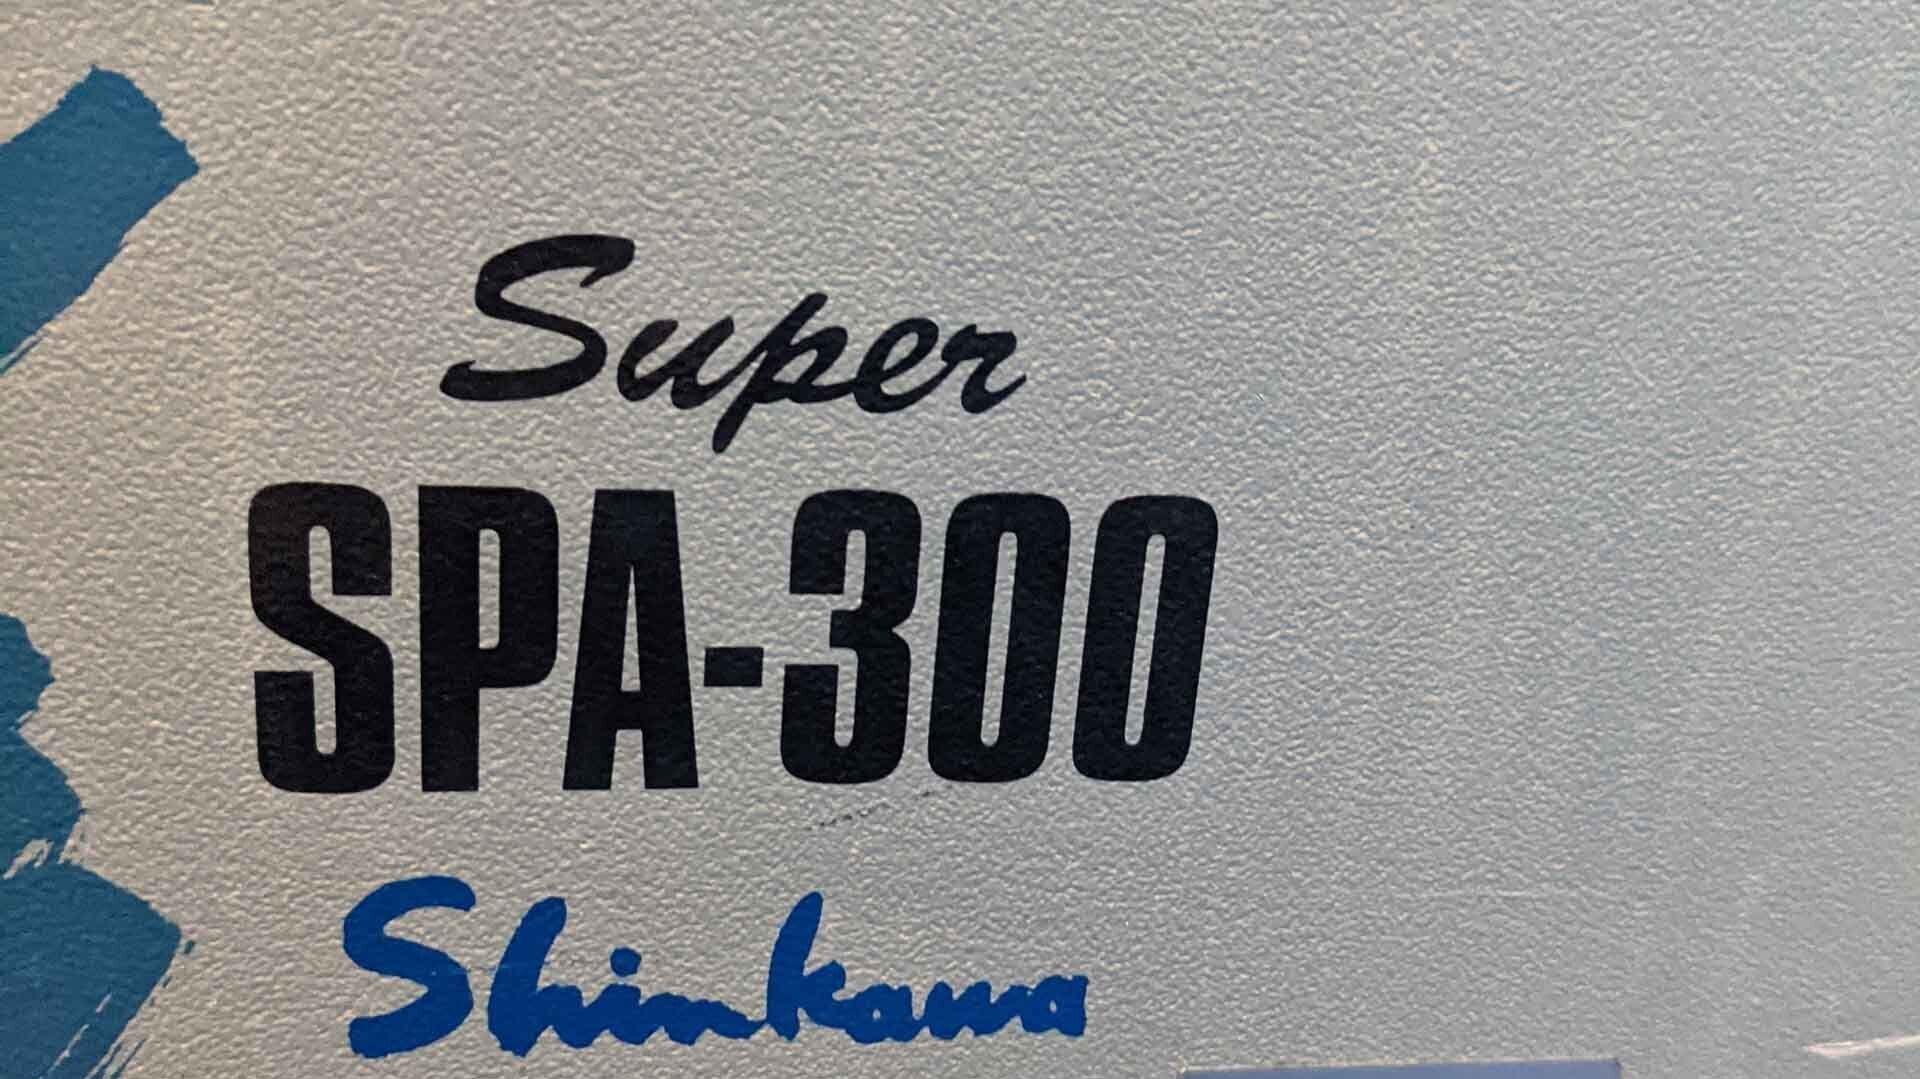 Photo Utilisé SHINKAWA SPA-300 Super À vendre